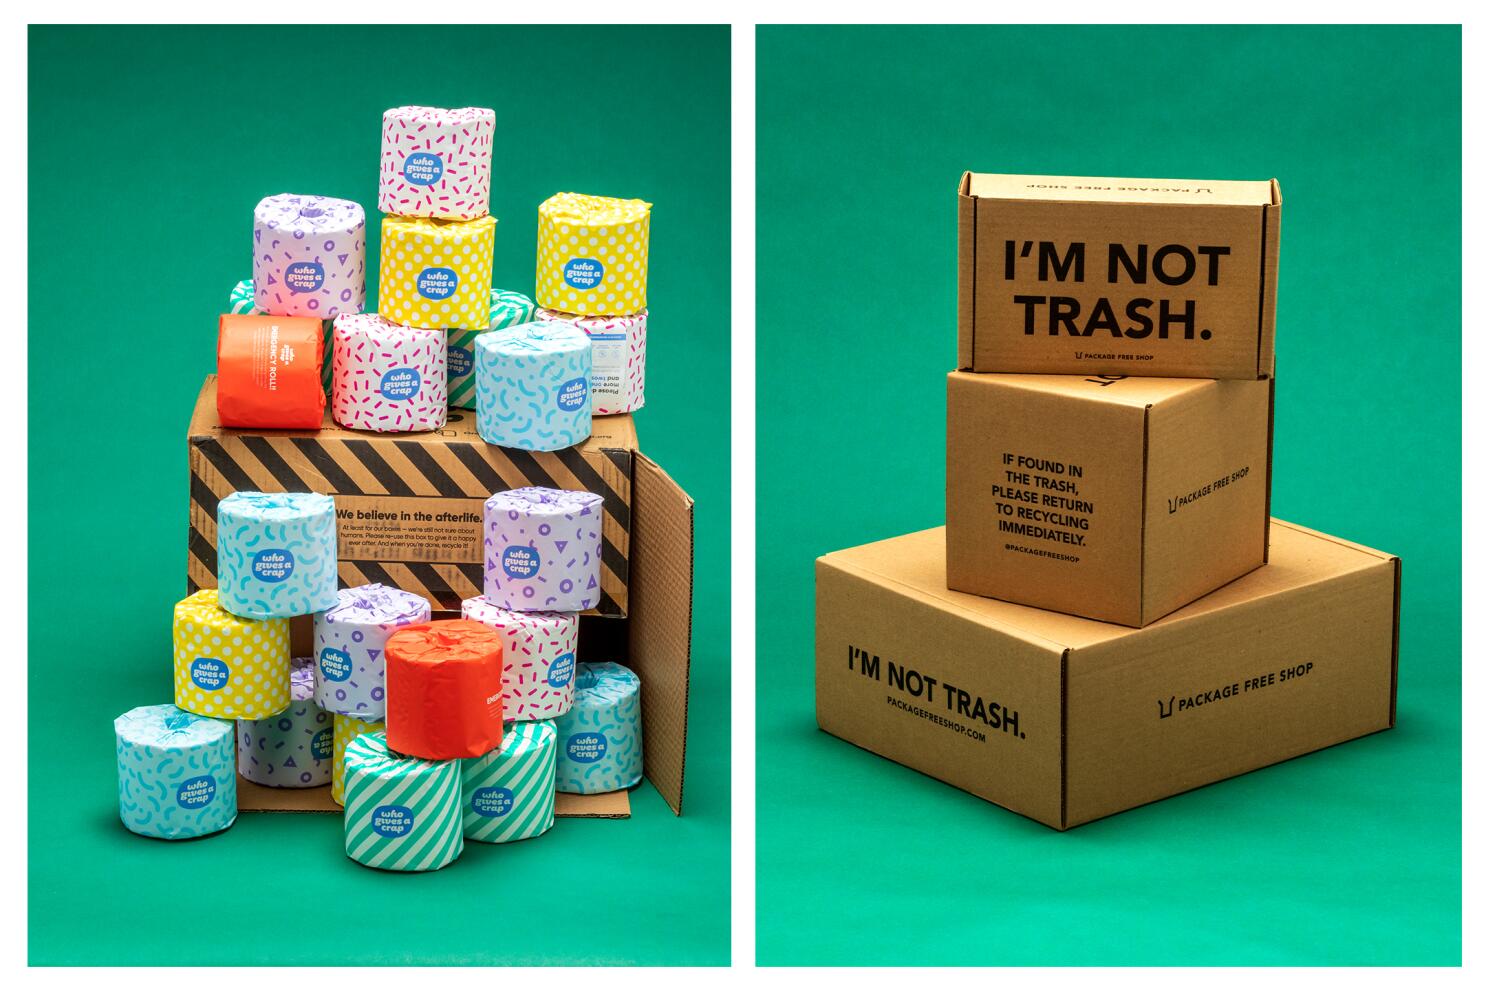 20 Boxes of Compostable Cling Wrap - Bonnie Biodegradable website